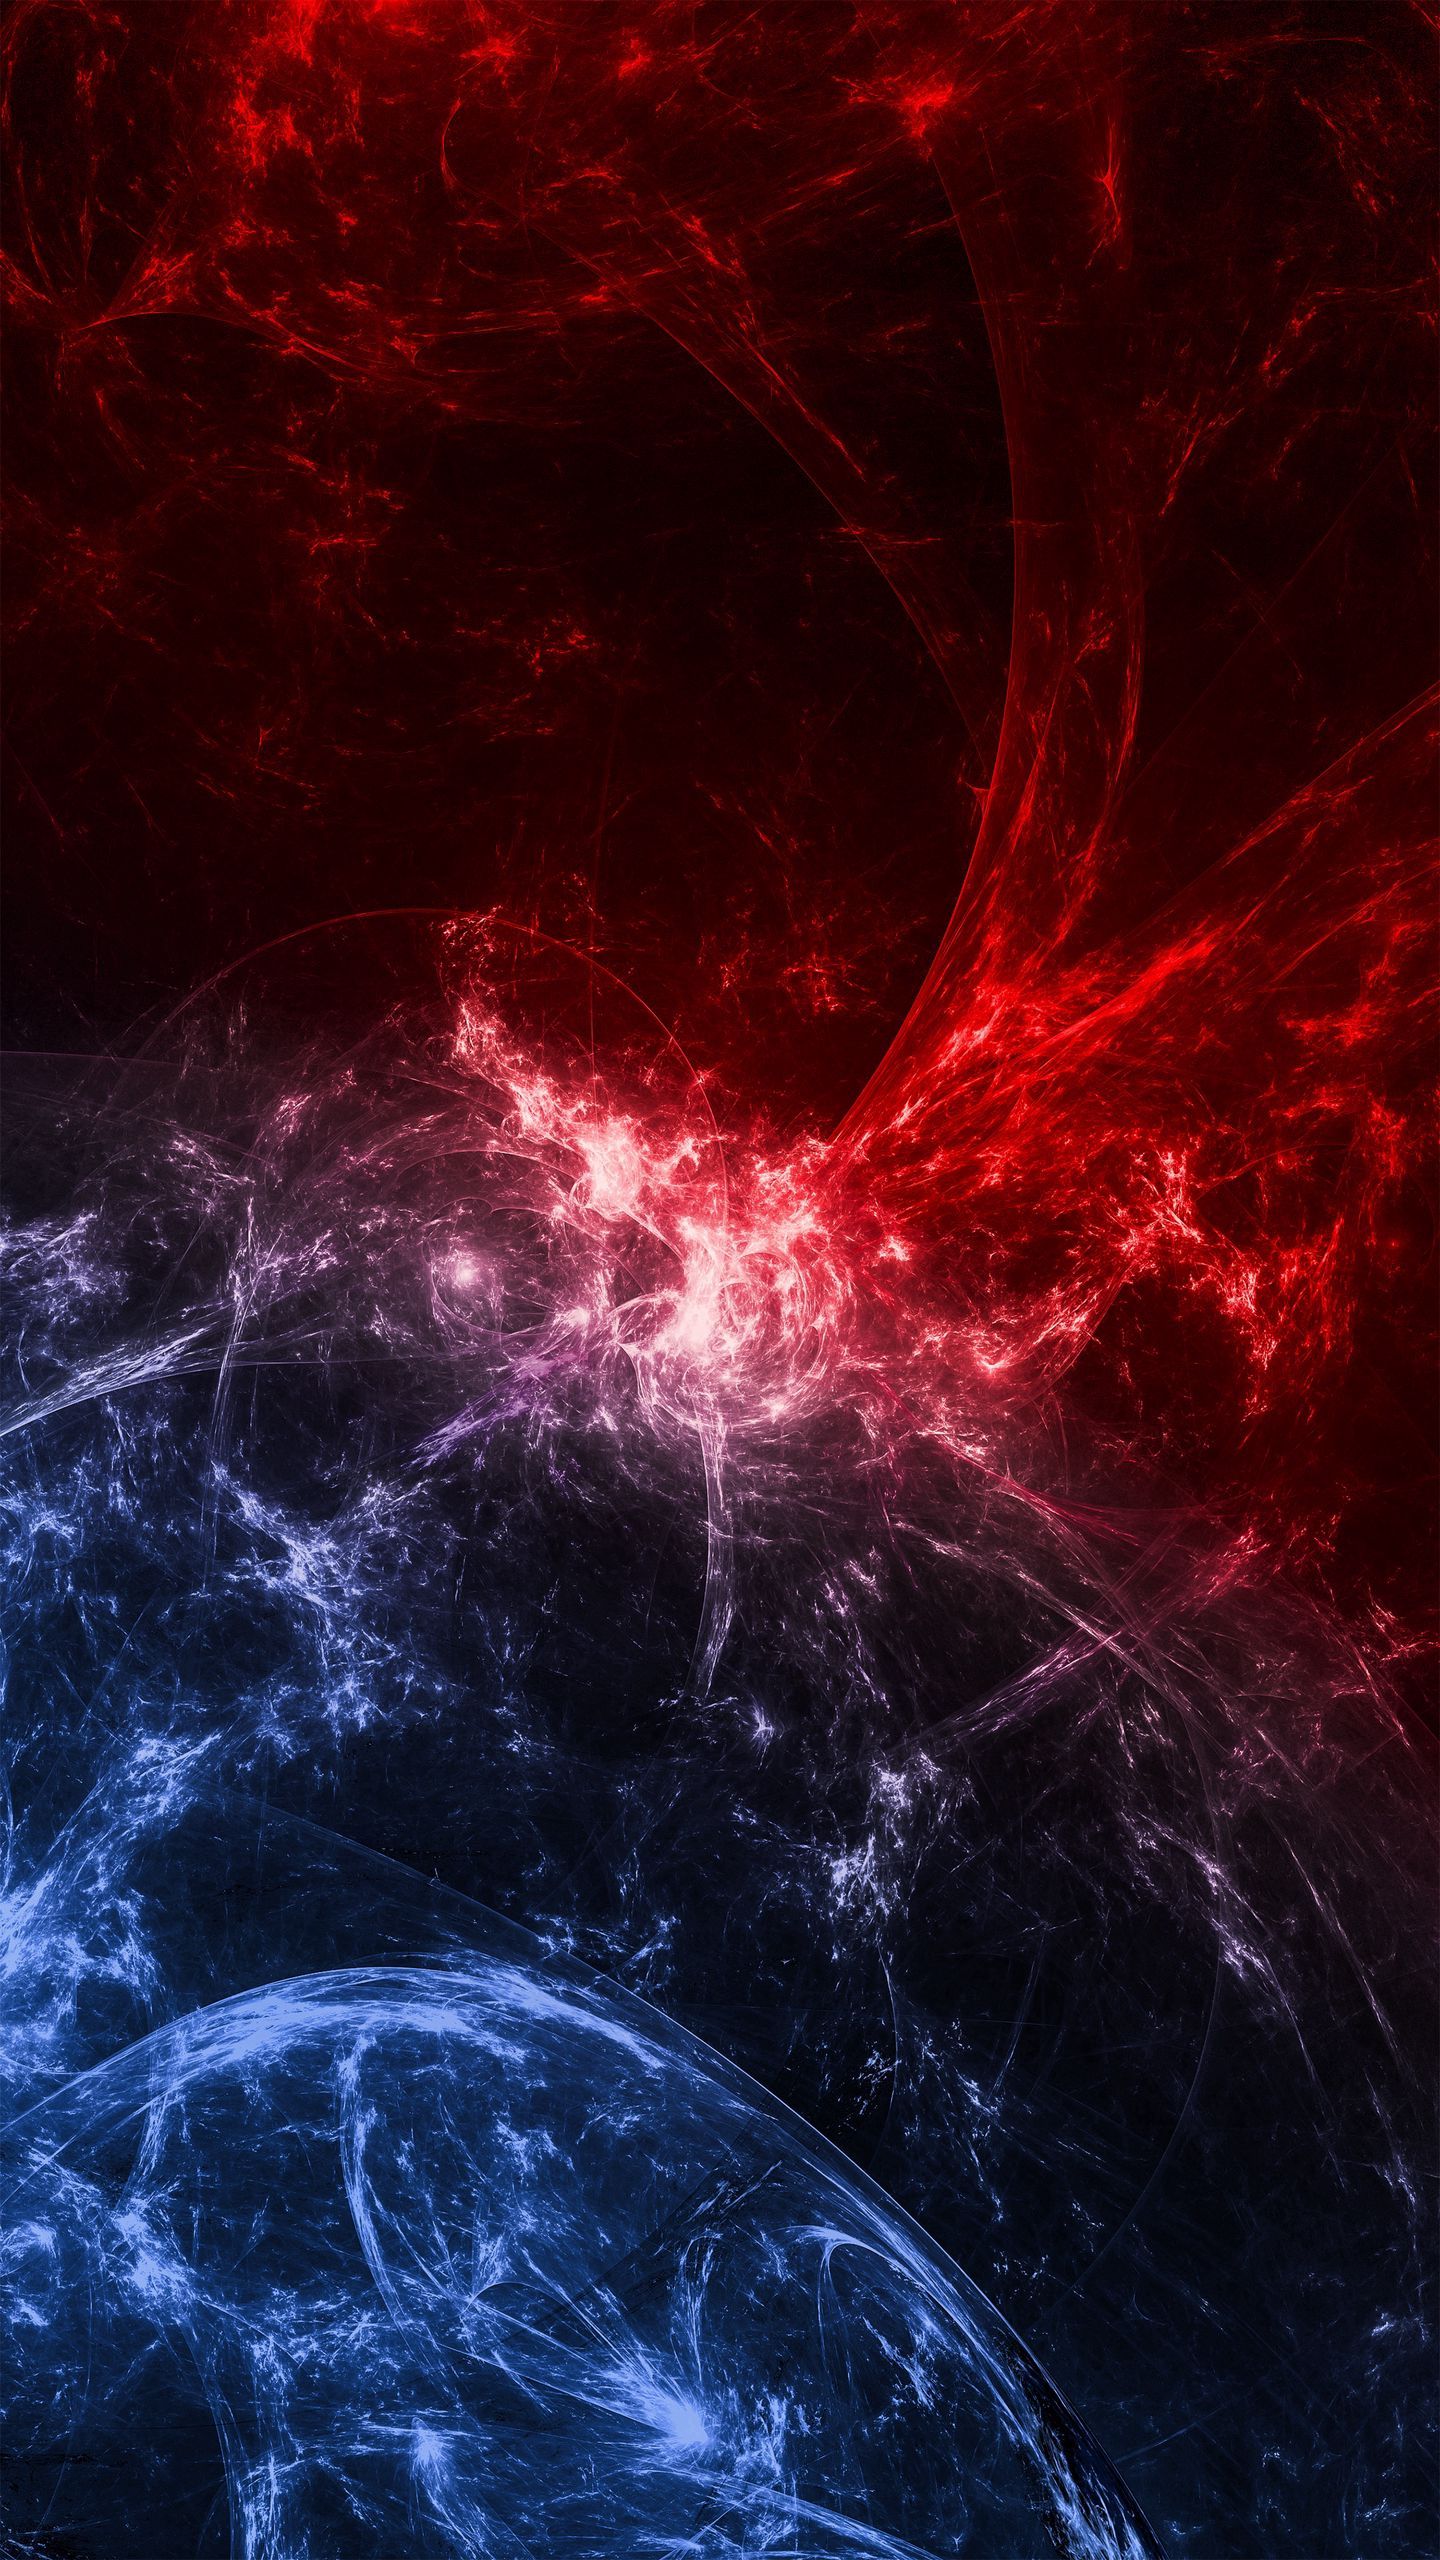 Download wallpaper 1440x2560 fractal, shroud, patterns, red, blue qhd samsung galaxy s s edge, note, lg g4 HD background